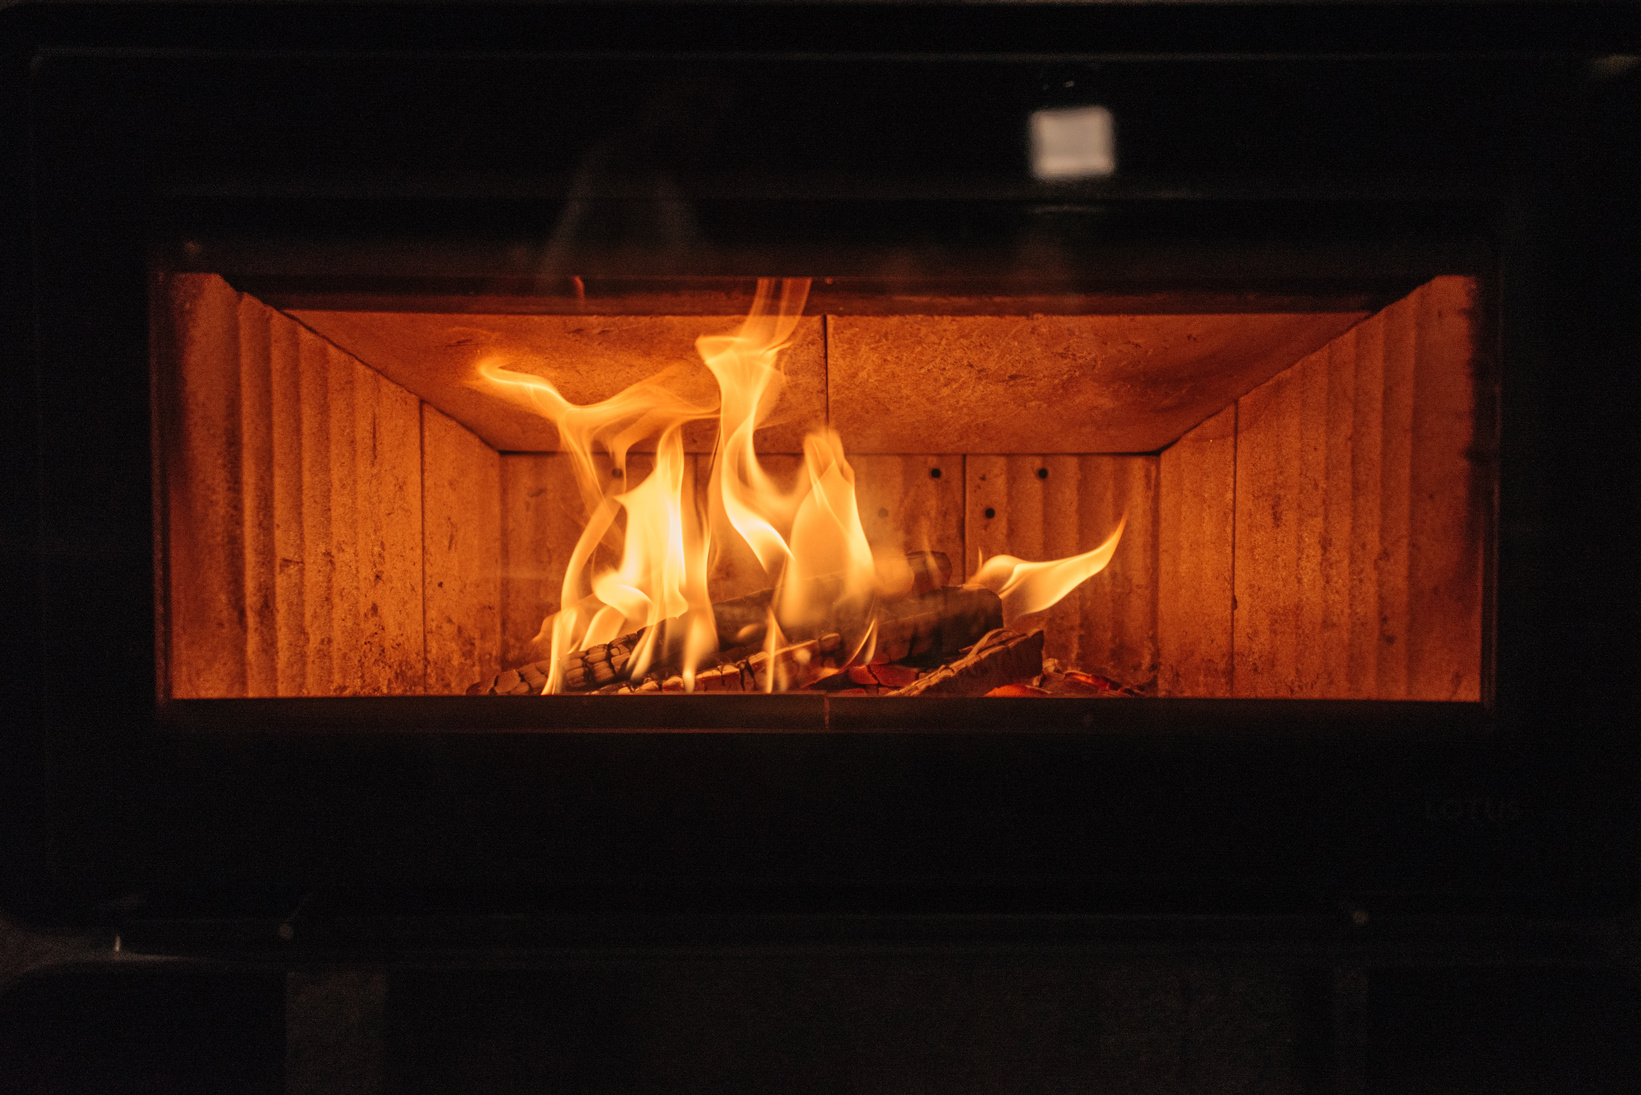 Photograph of a Lit Fireplace